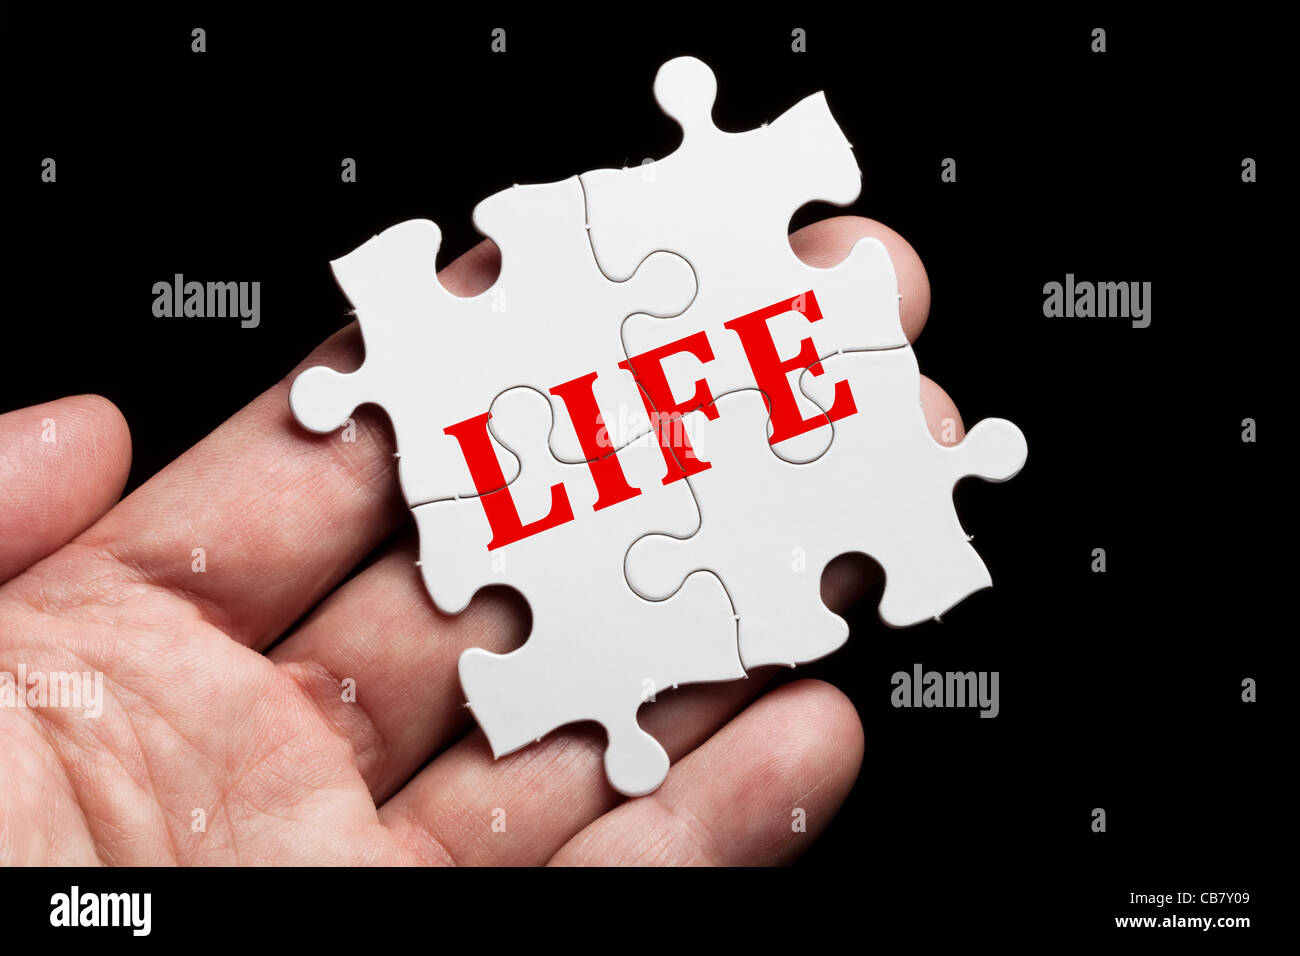 Puzzle, concept of Life Balance Stock Photo